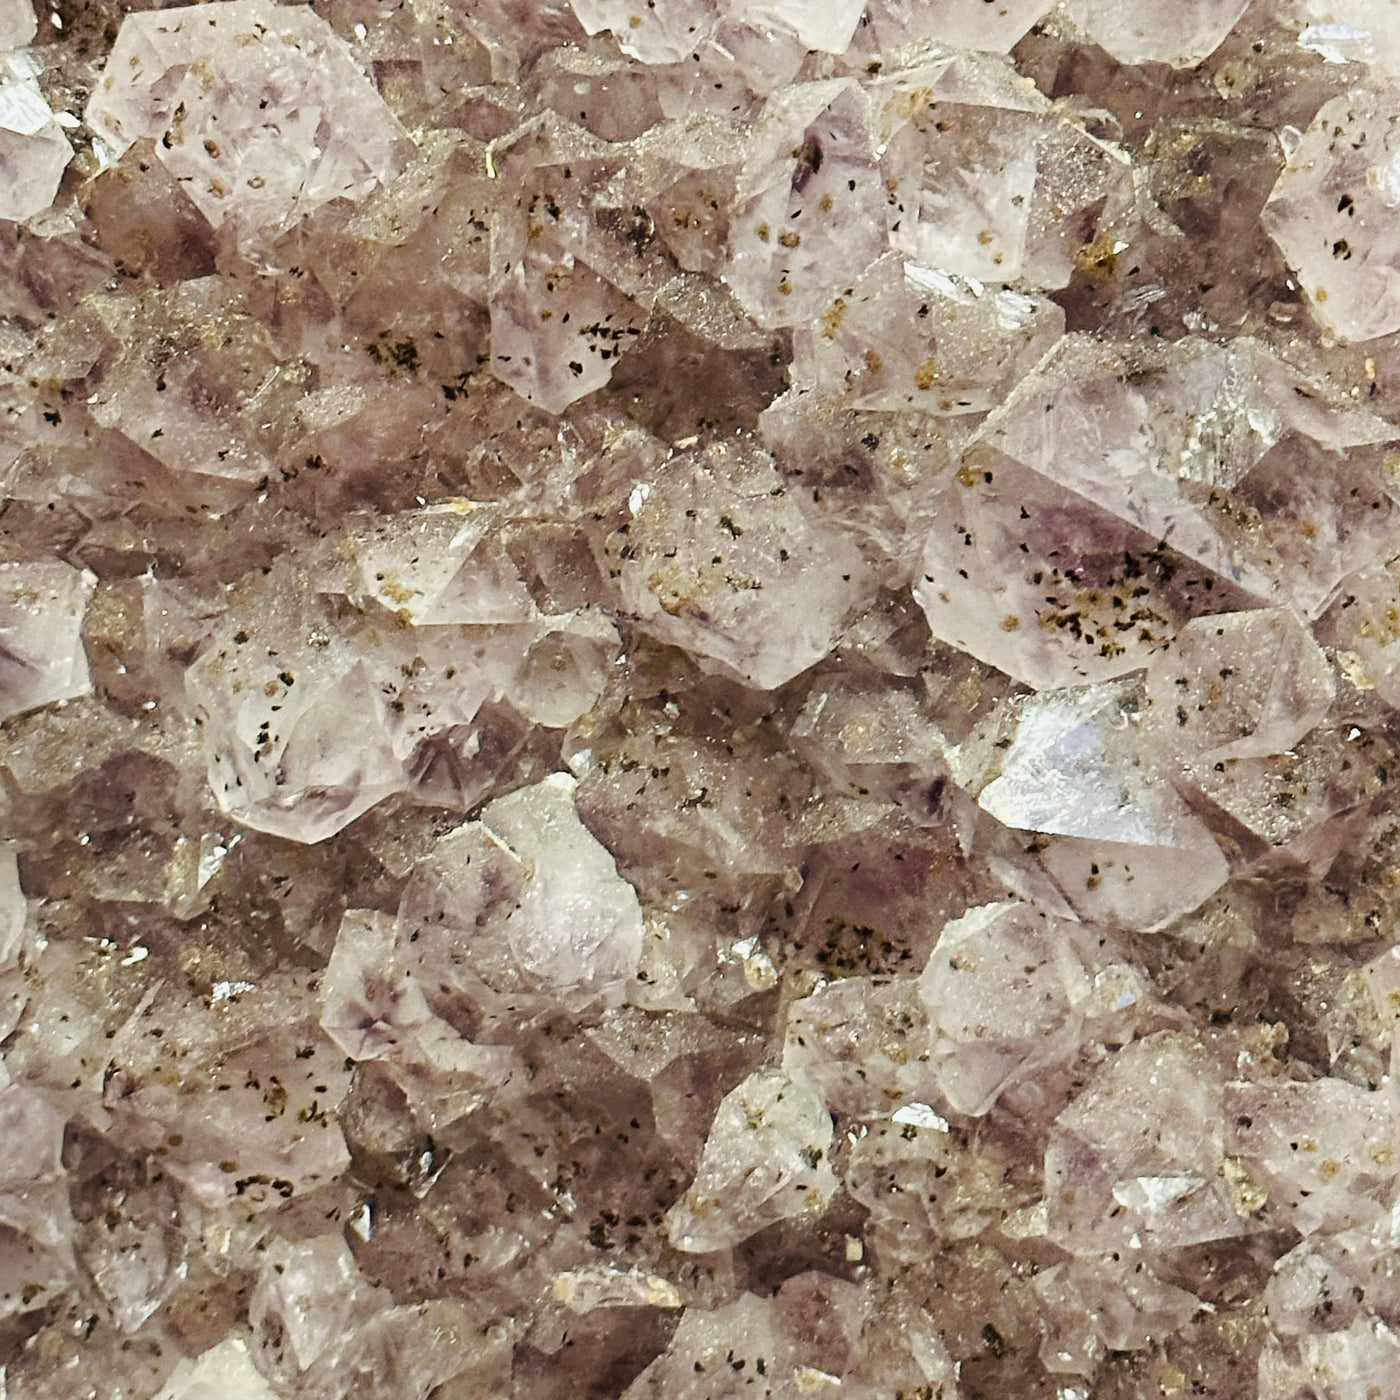 up close shot of amethyst